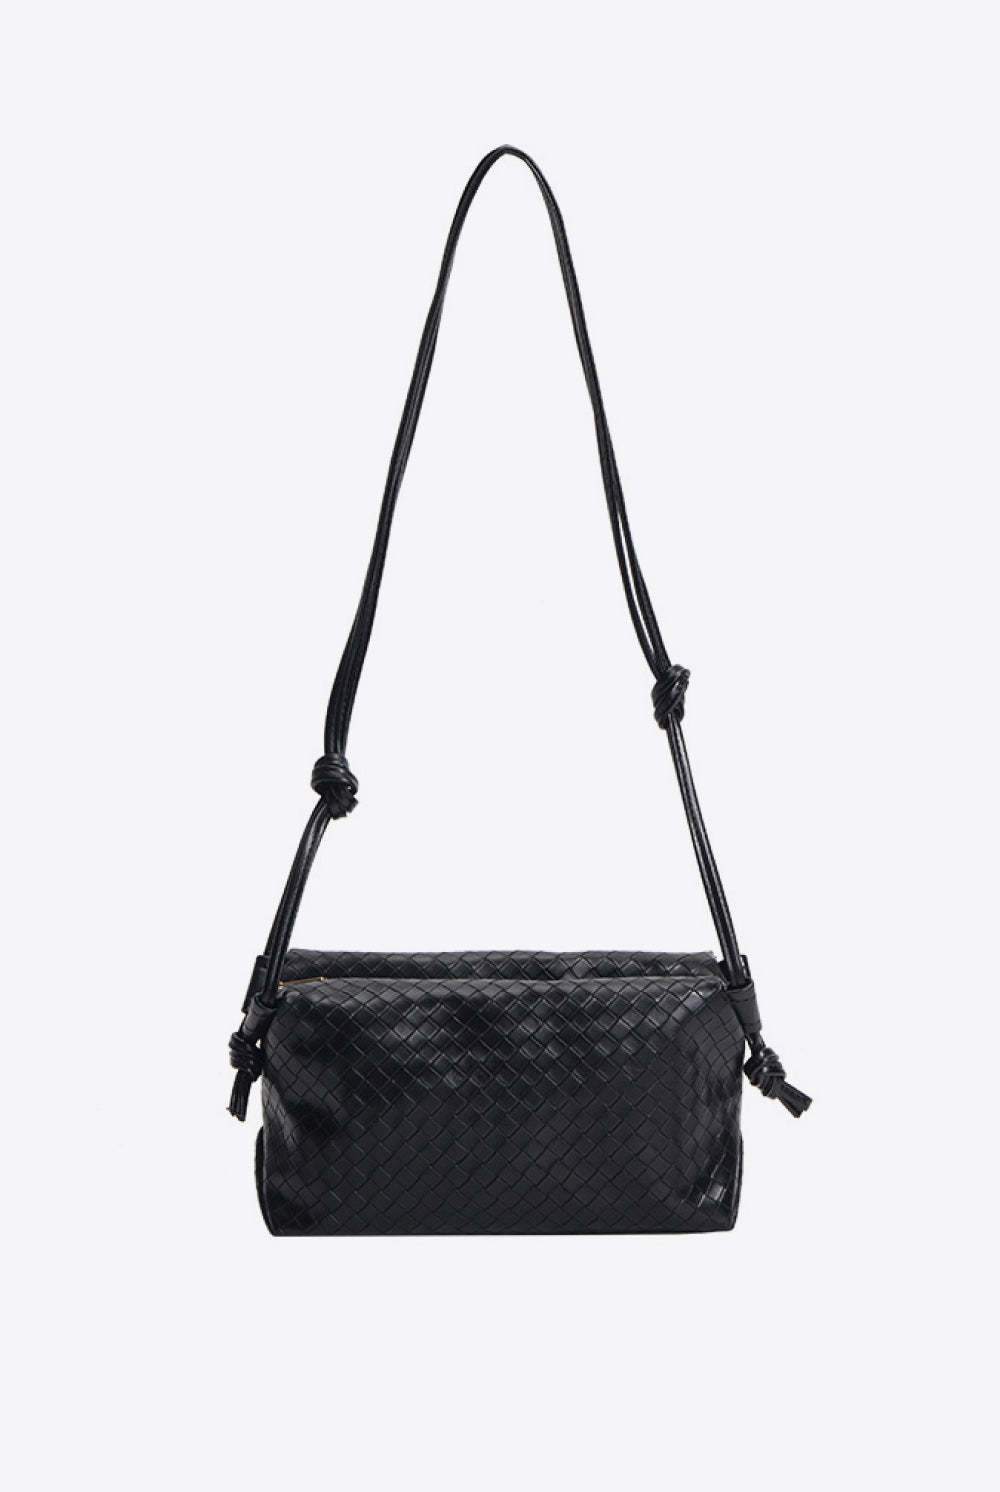 White Smoke PU Leather Knot Detail Shoulder Bag Handbags